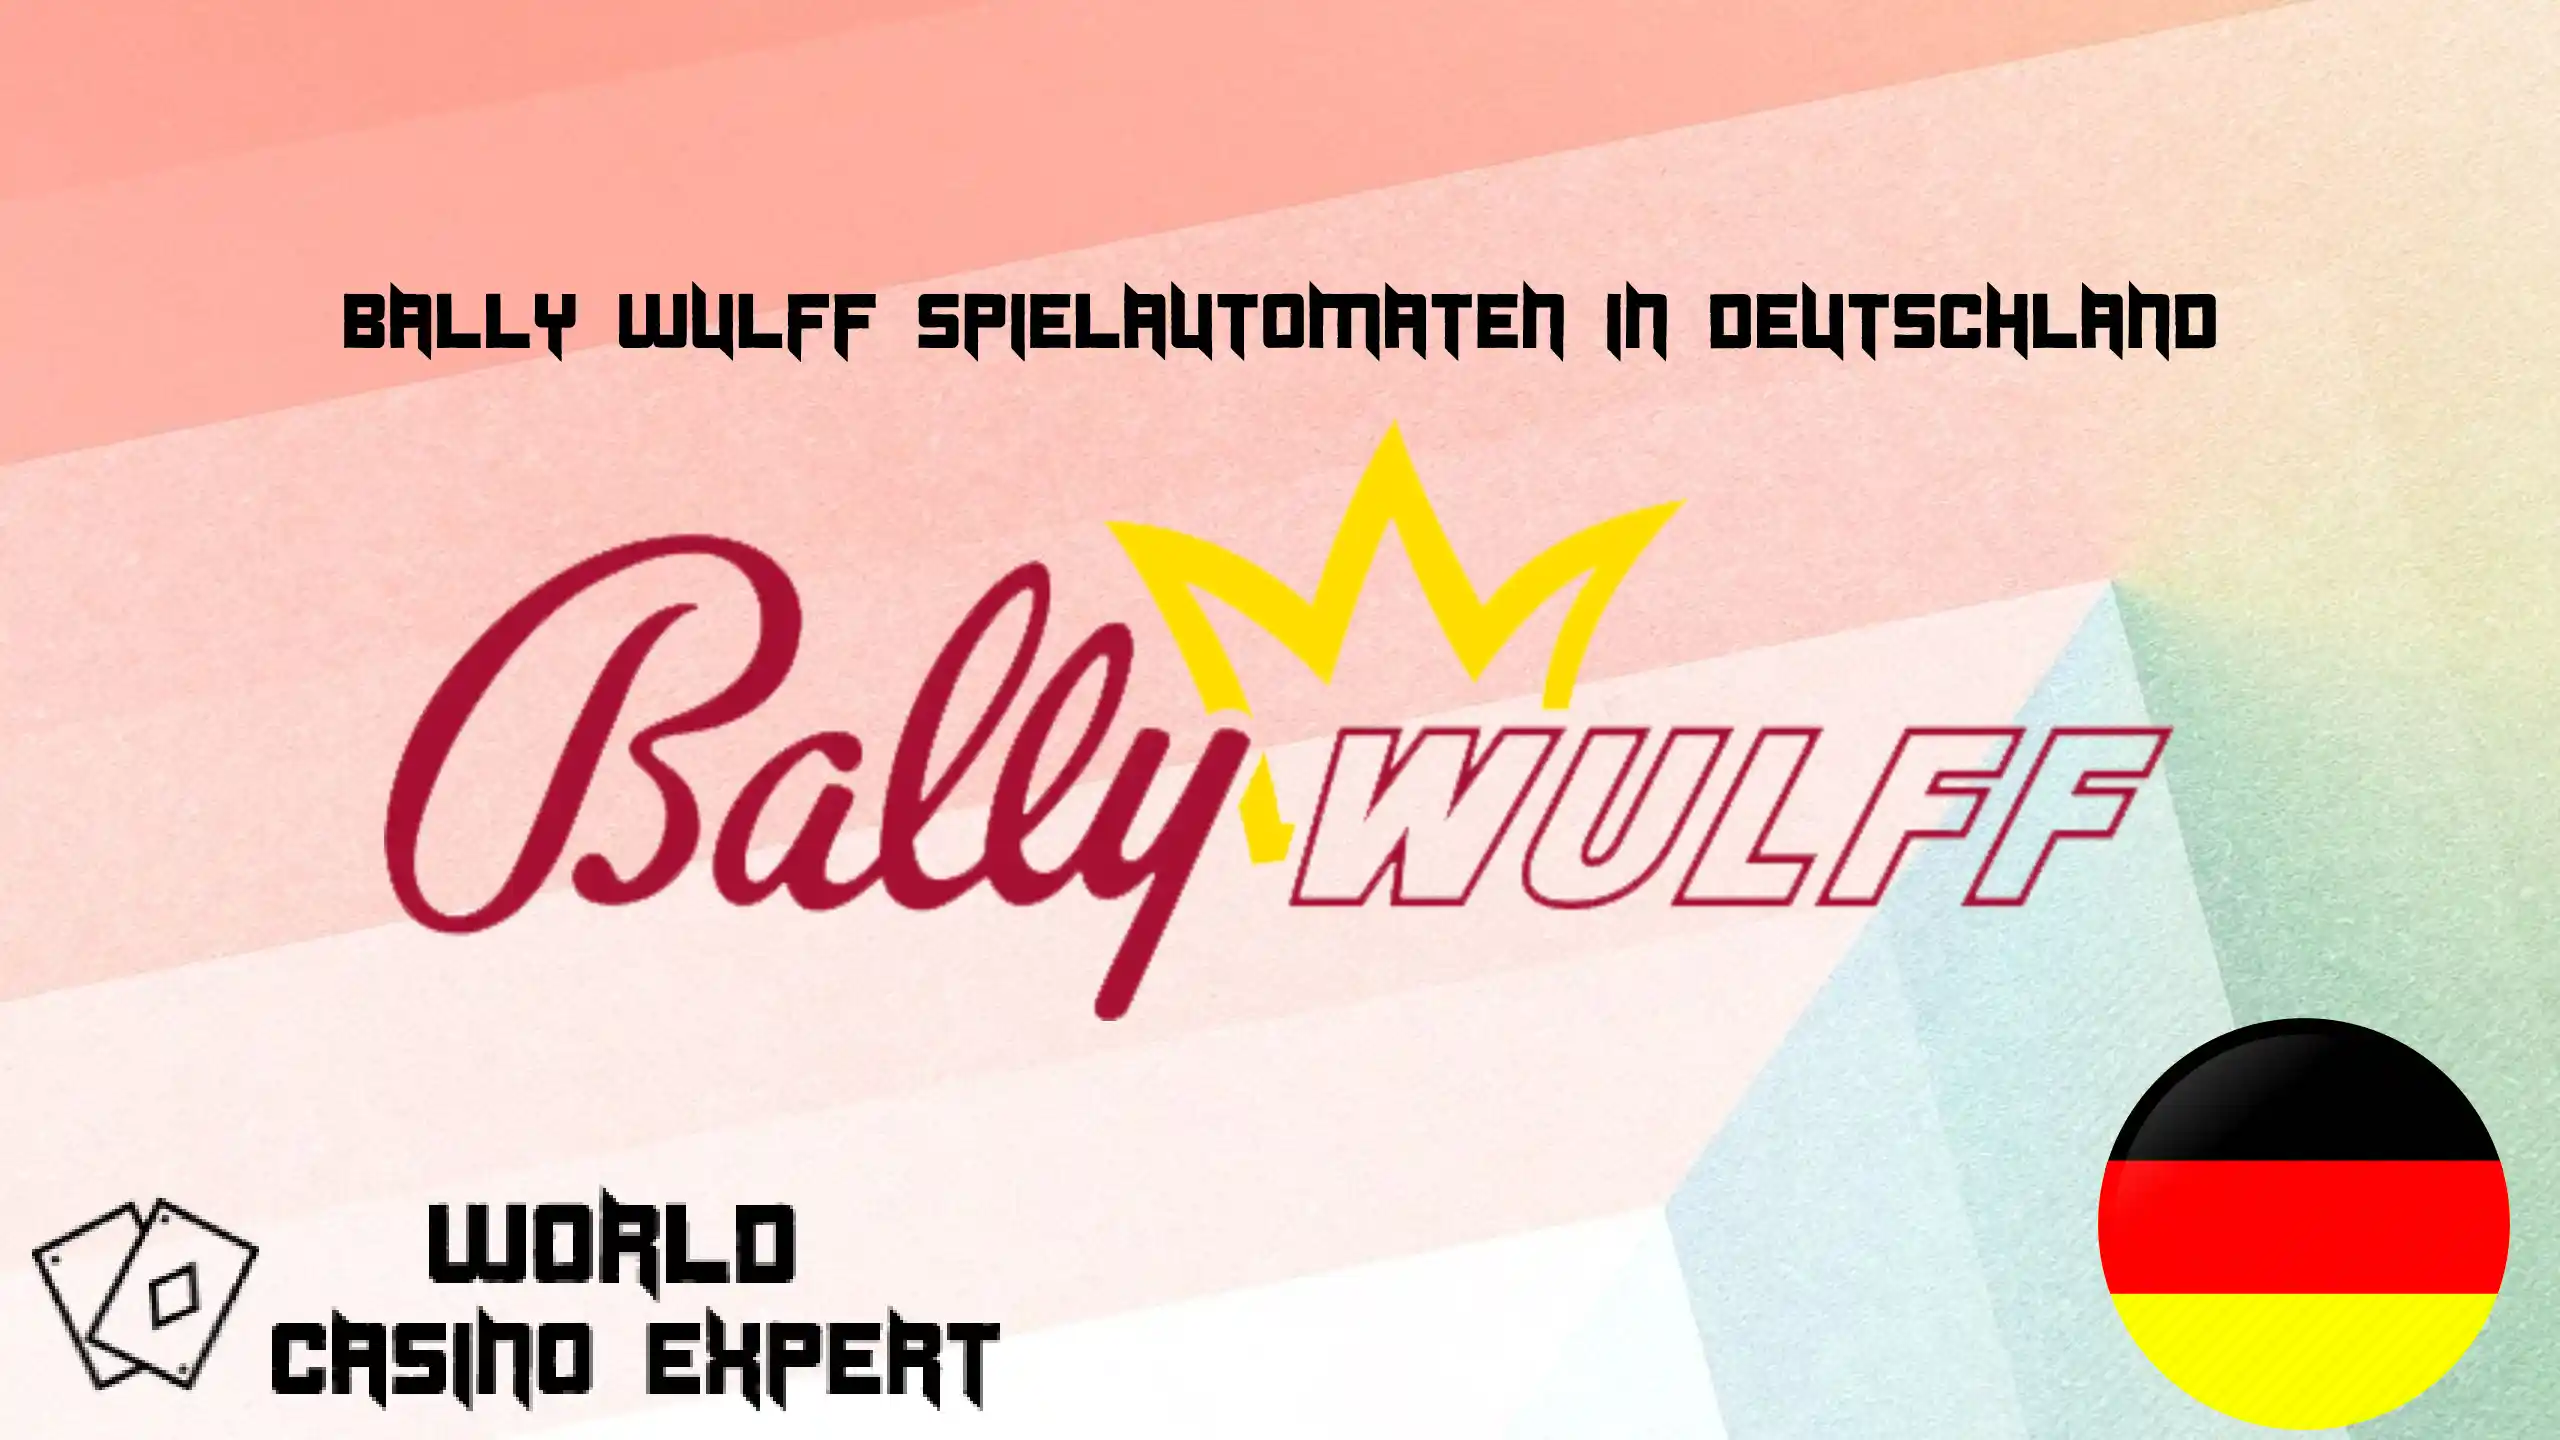 Bally Wulff Spielautomaten in Dutschland | World Casino Expert Dutschland 